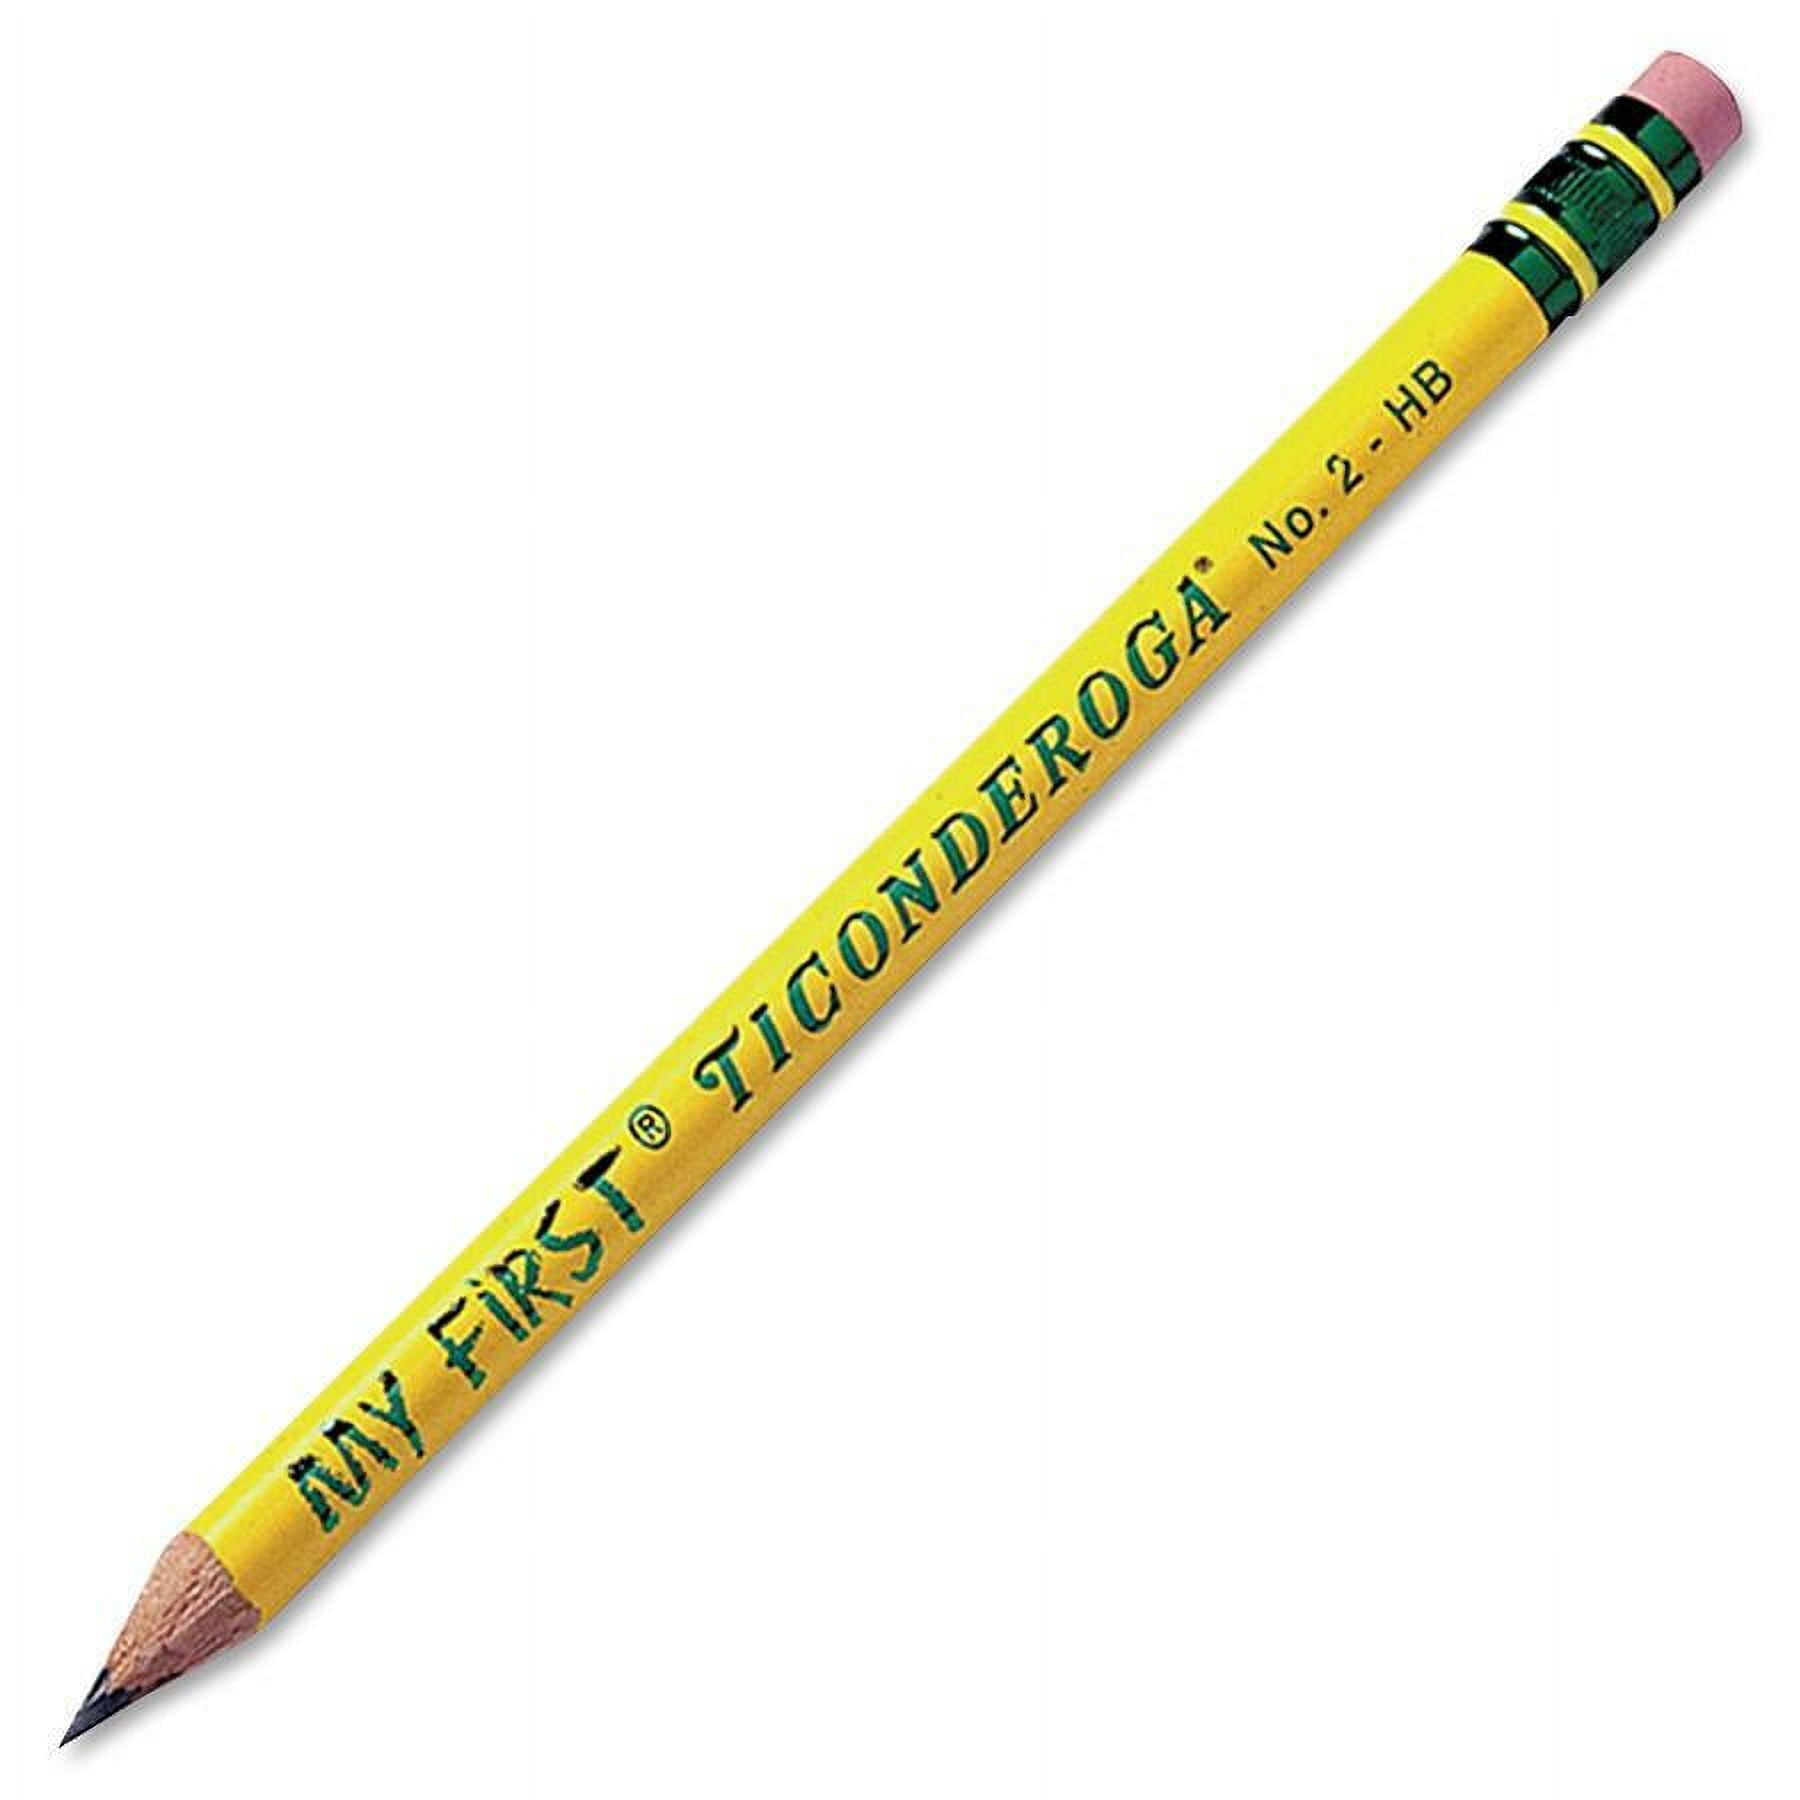 Pencil Review: Made-in-Mexico Dixon Ticonderoga (No. 1/B) – Polar